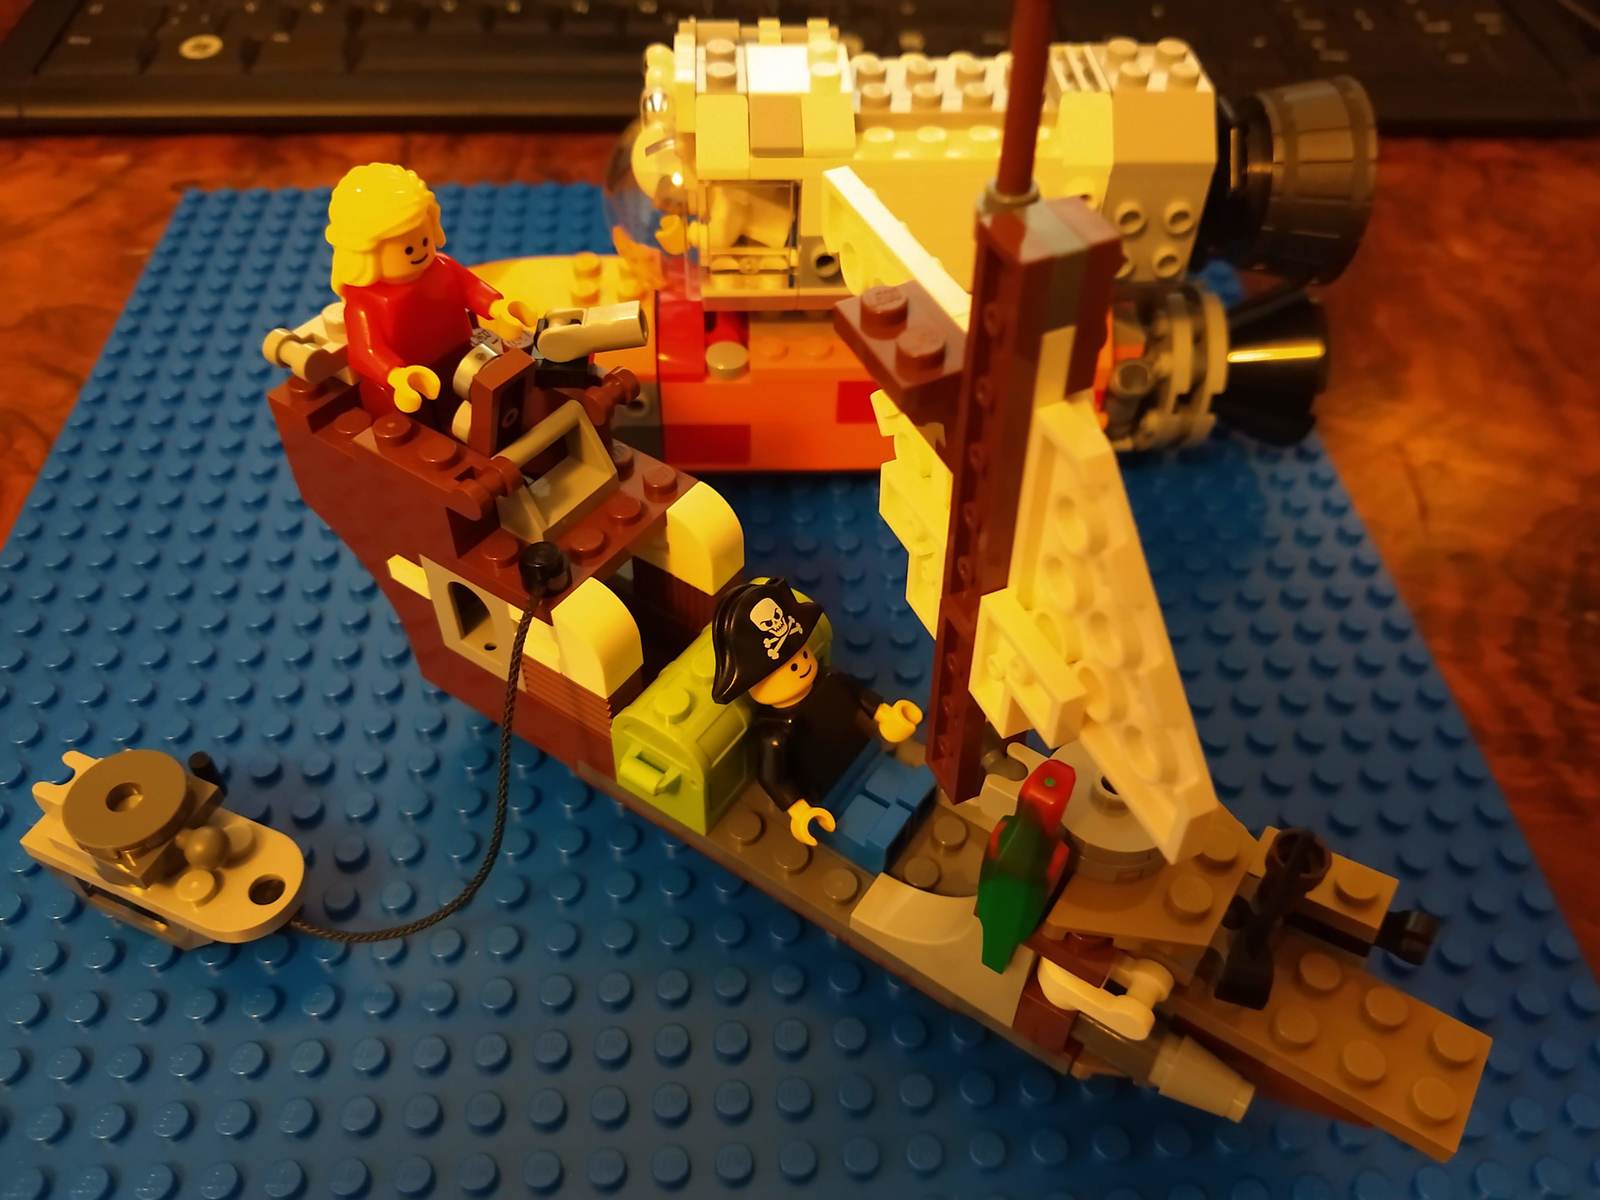 Real pirate ship built alongside the modular rockets